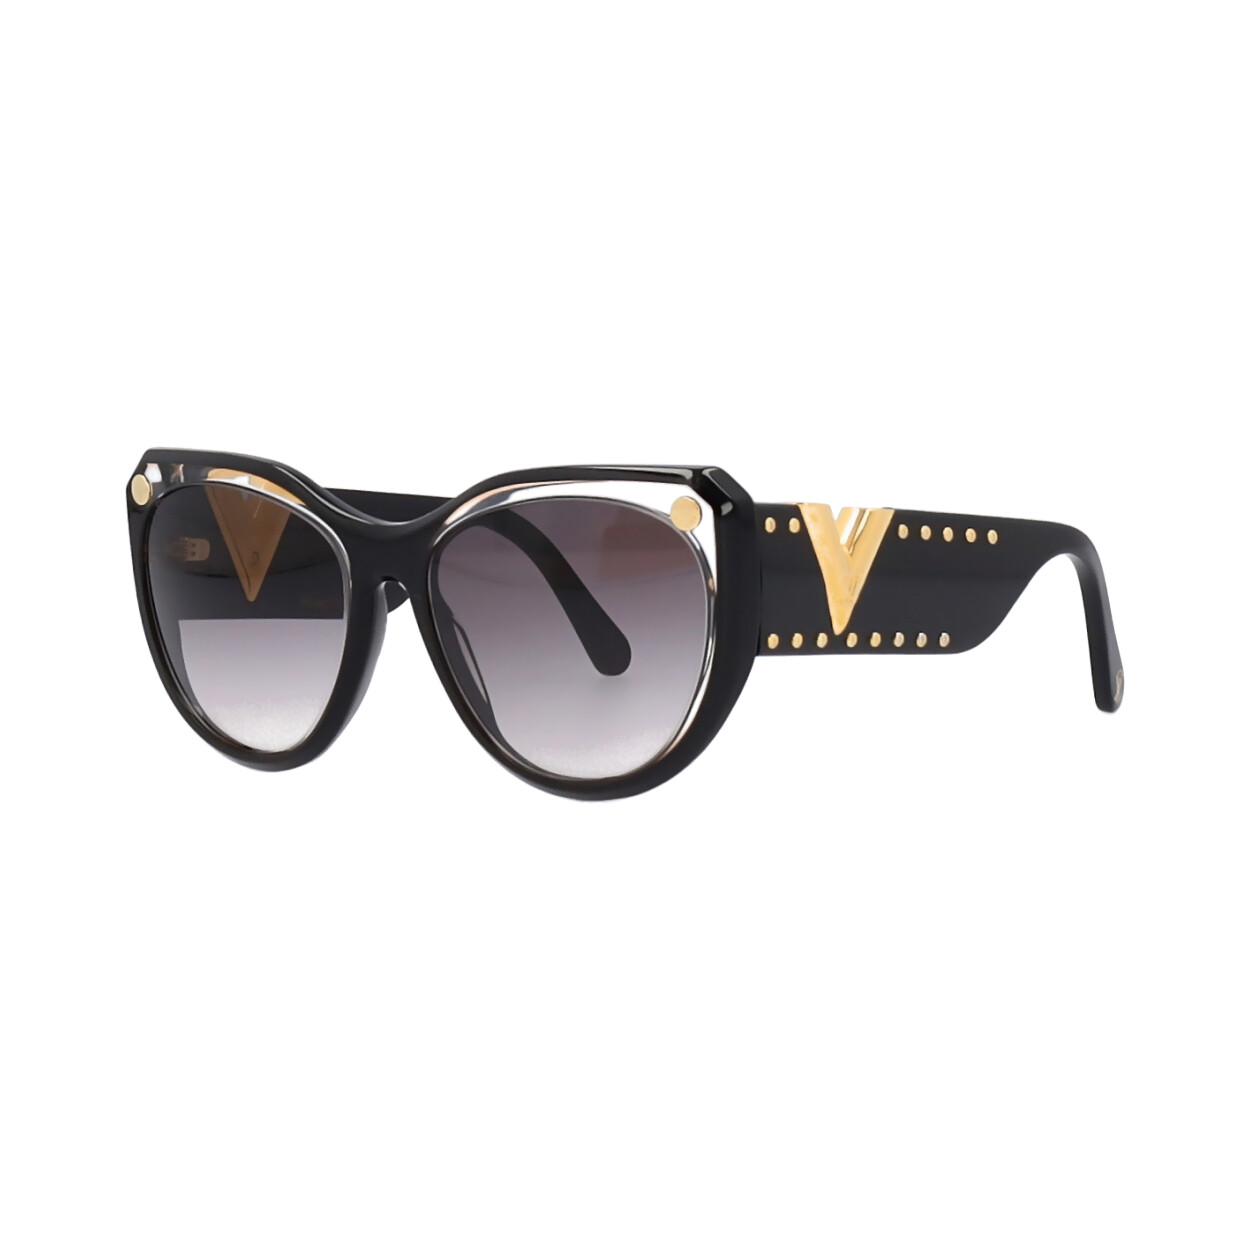 Louis Vuitton - My Fair Lady Sunglasses on Designer Wardrobe